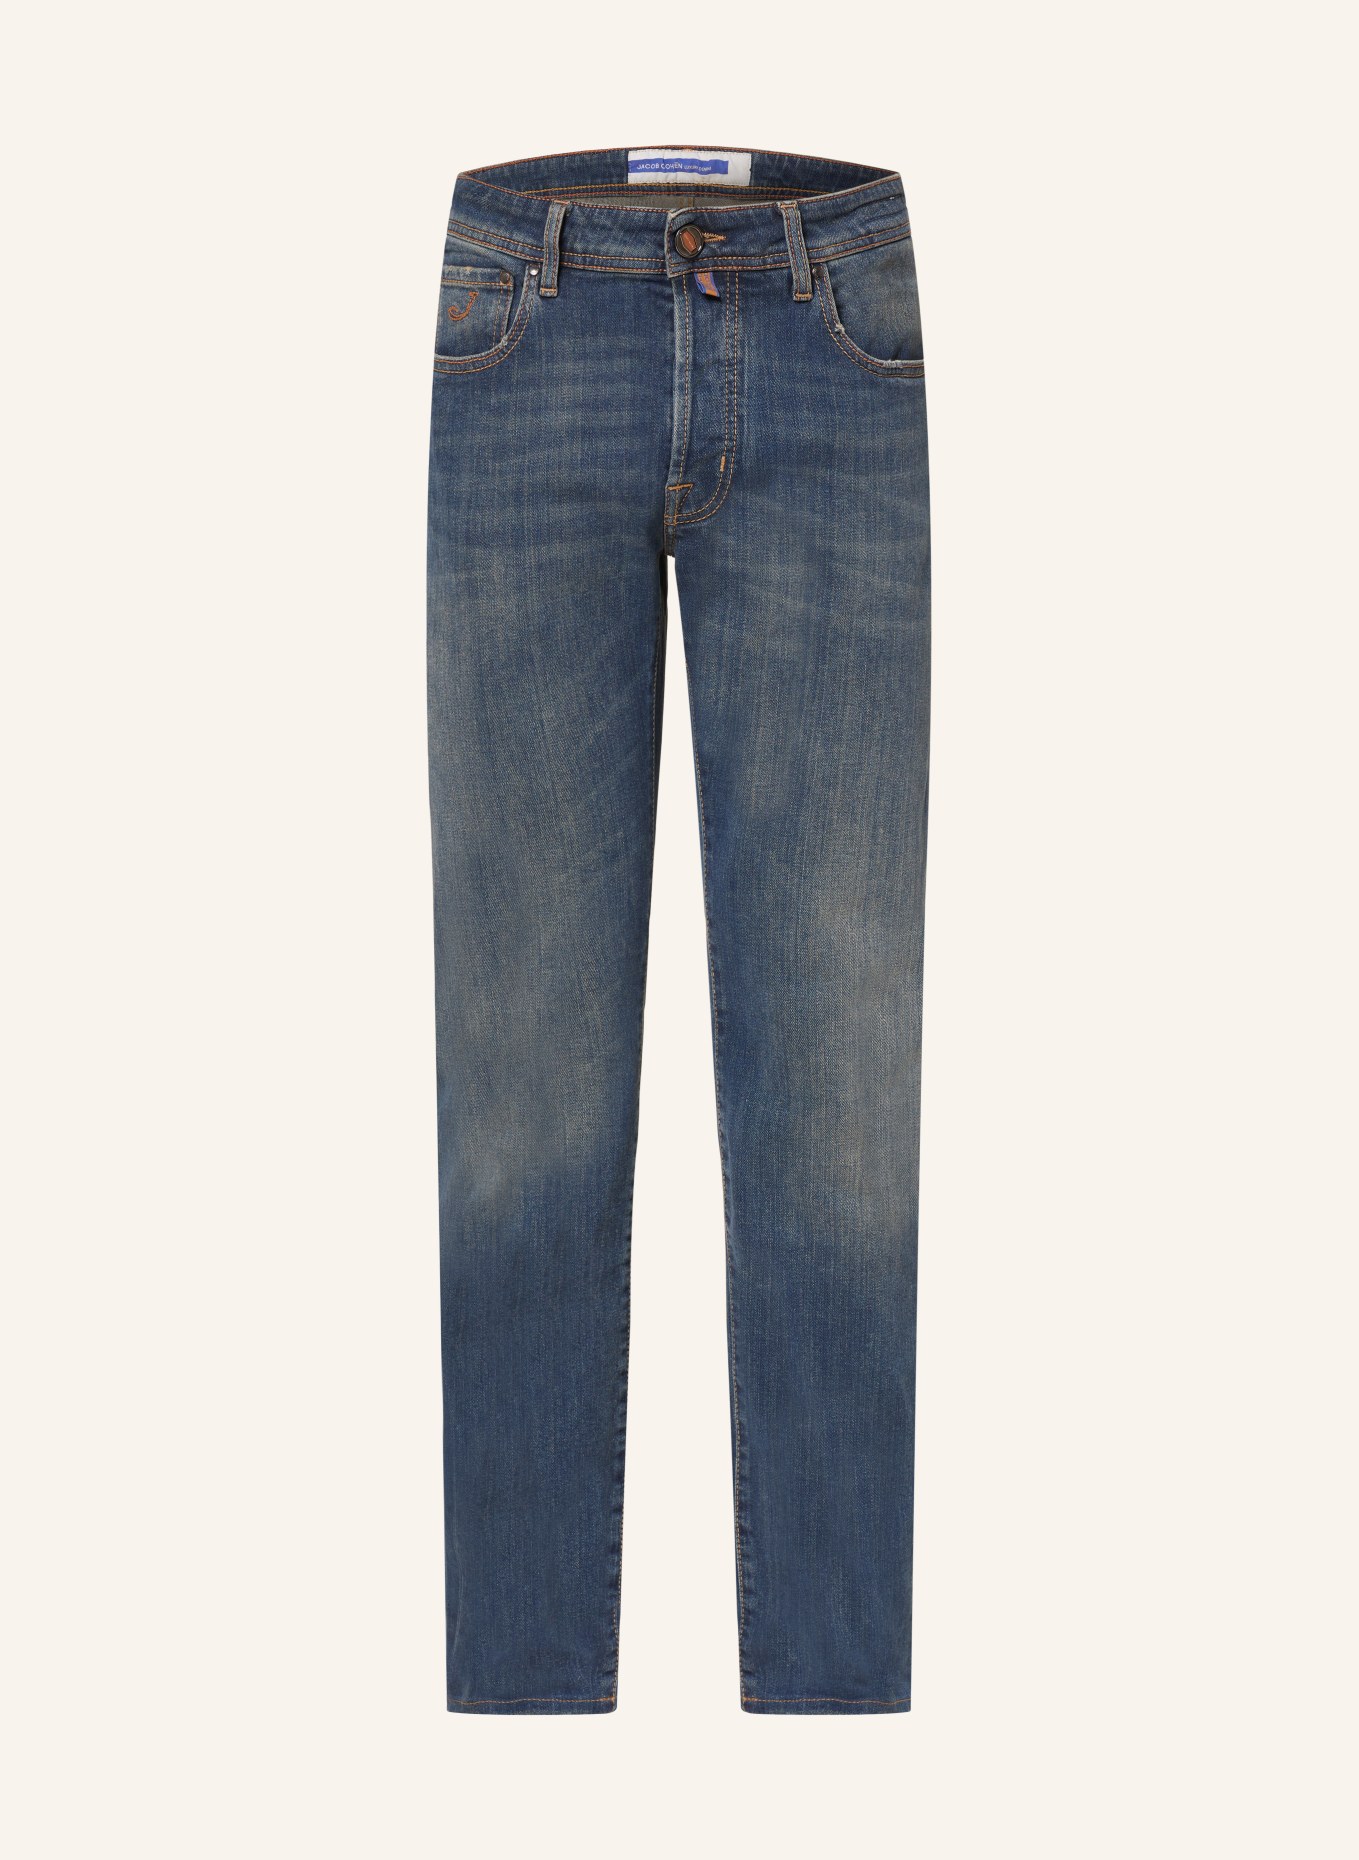 JACOB COHEN Jeans BARD Slim Fit, Farbe: 640D Mid Blue (Bild 1)